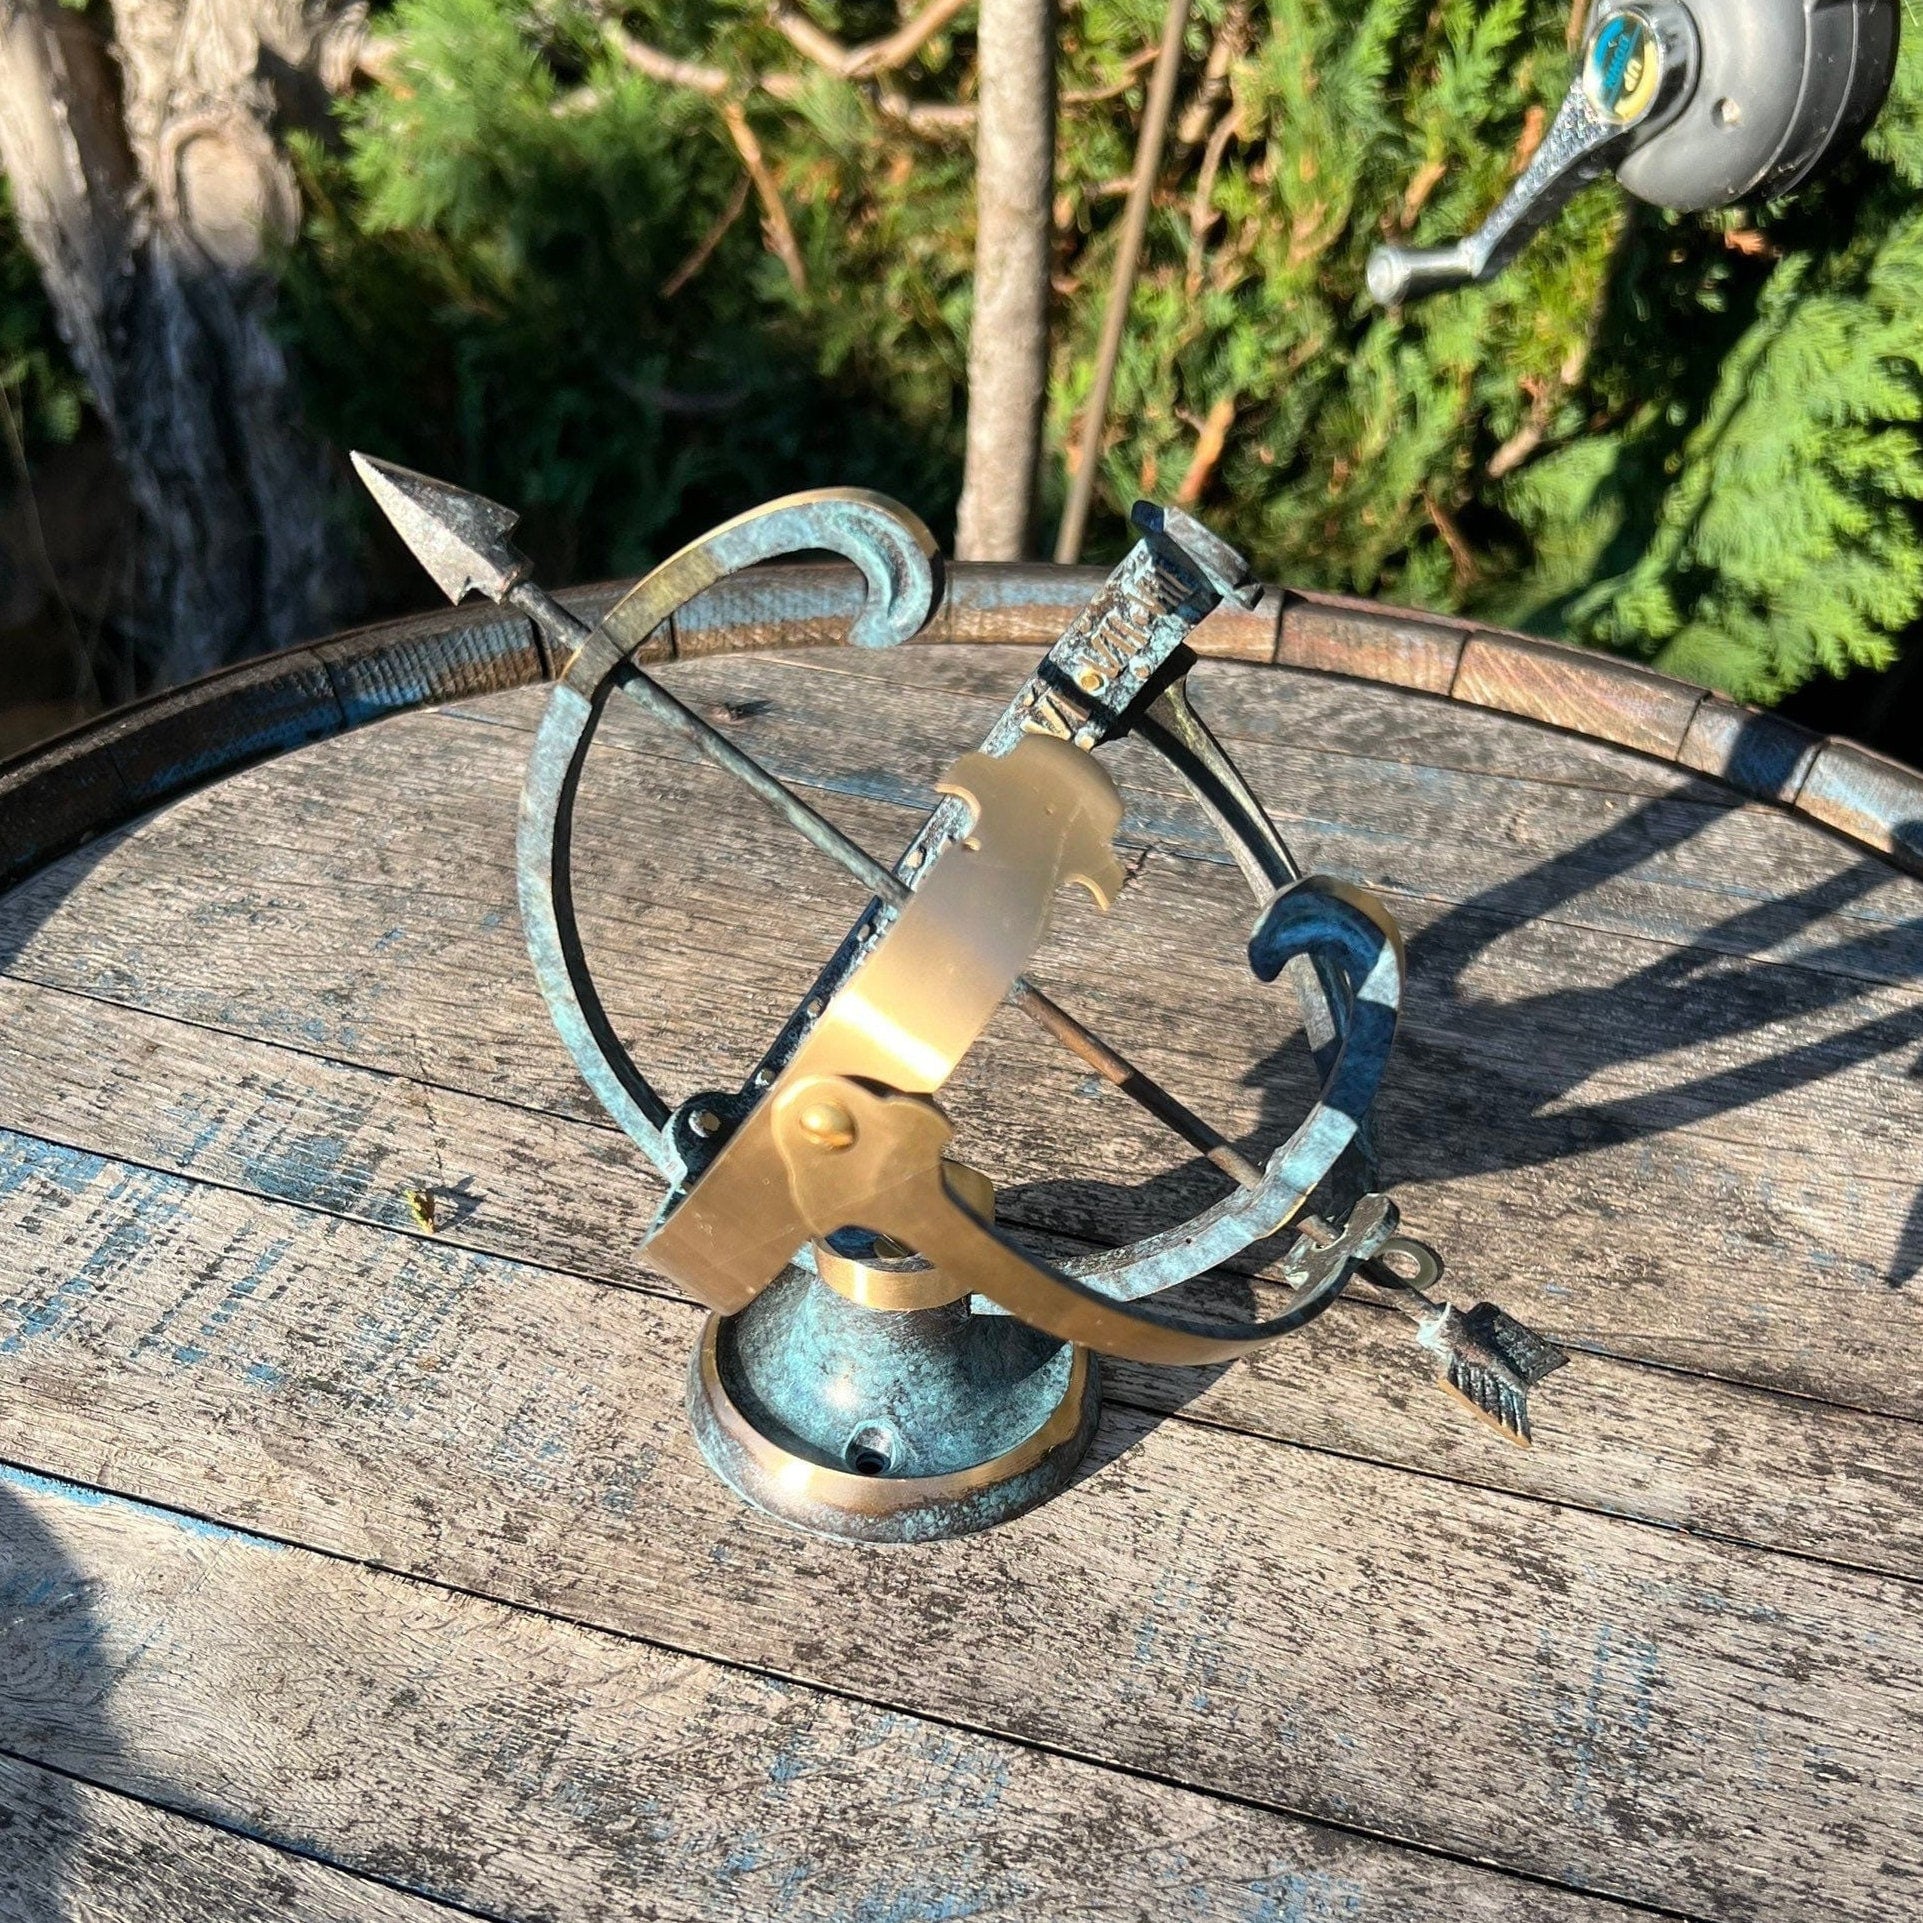 Armillary Small Sphere Sundial Solid Brass and Verdigris Patina Bronze Sculpture Sun Dial Watch Clock ~ Maxlume